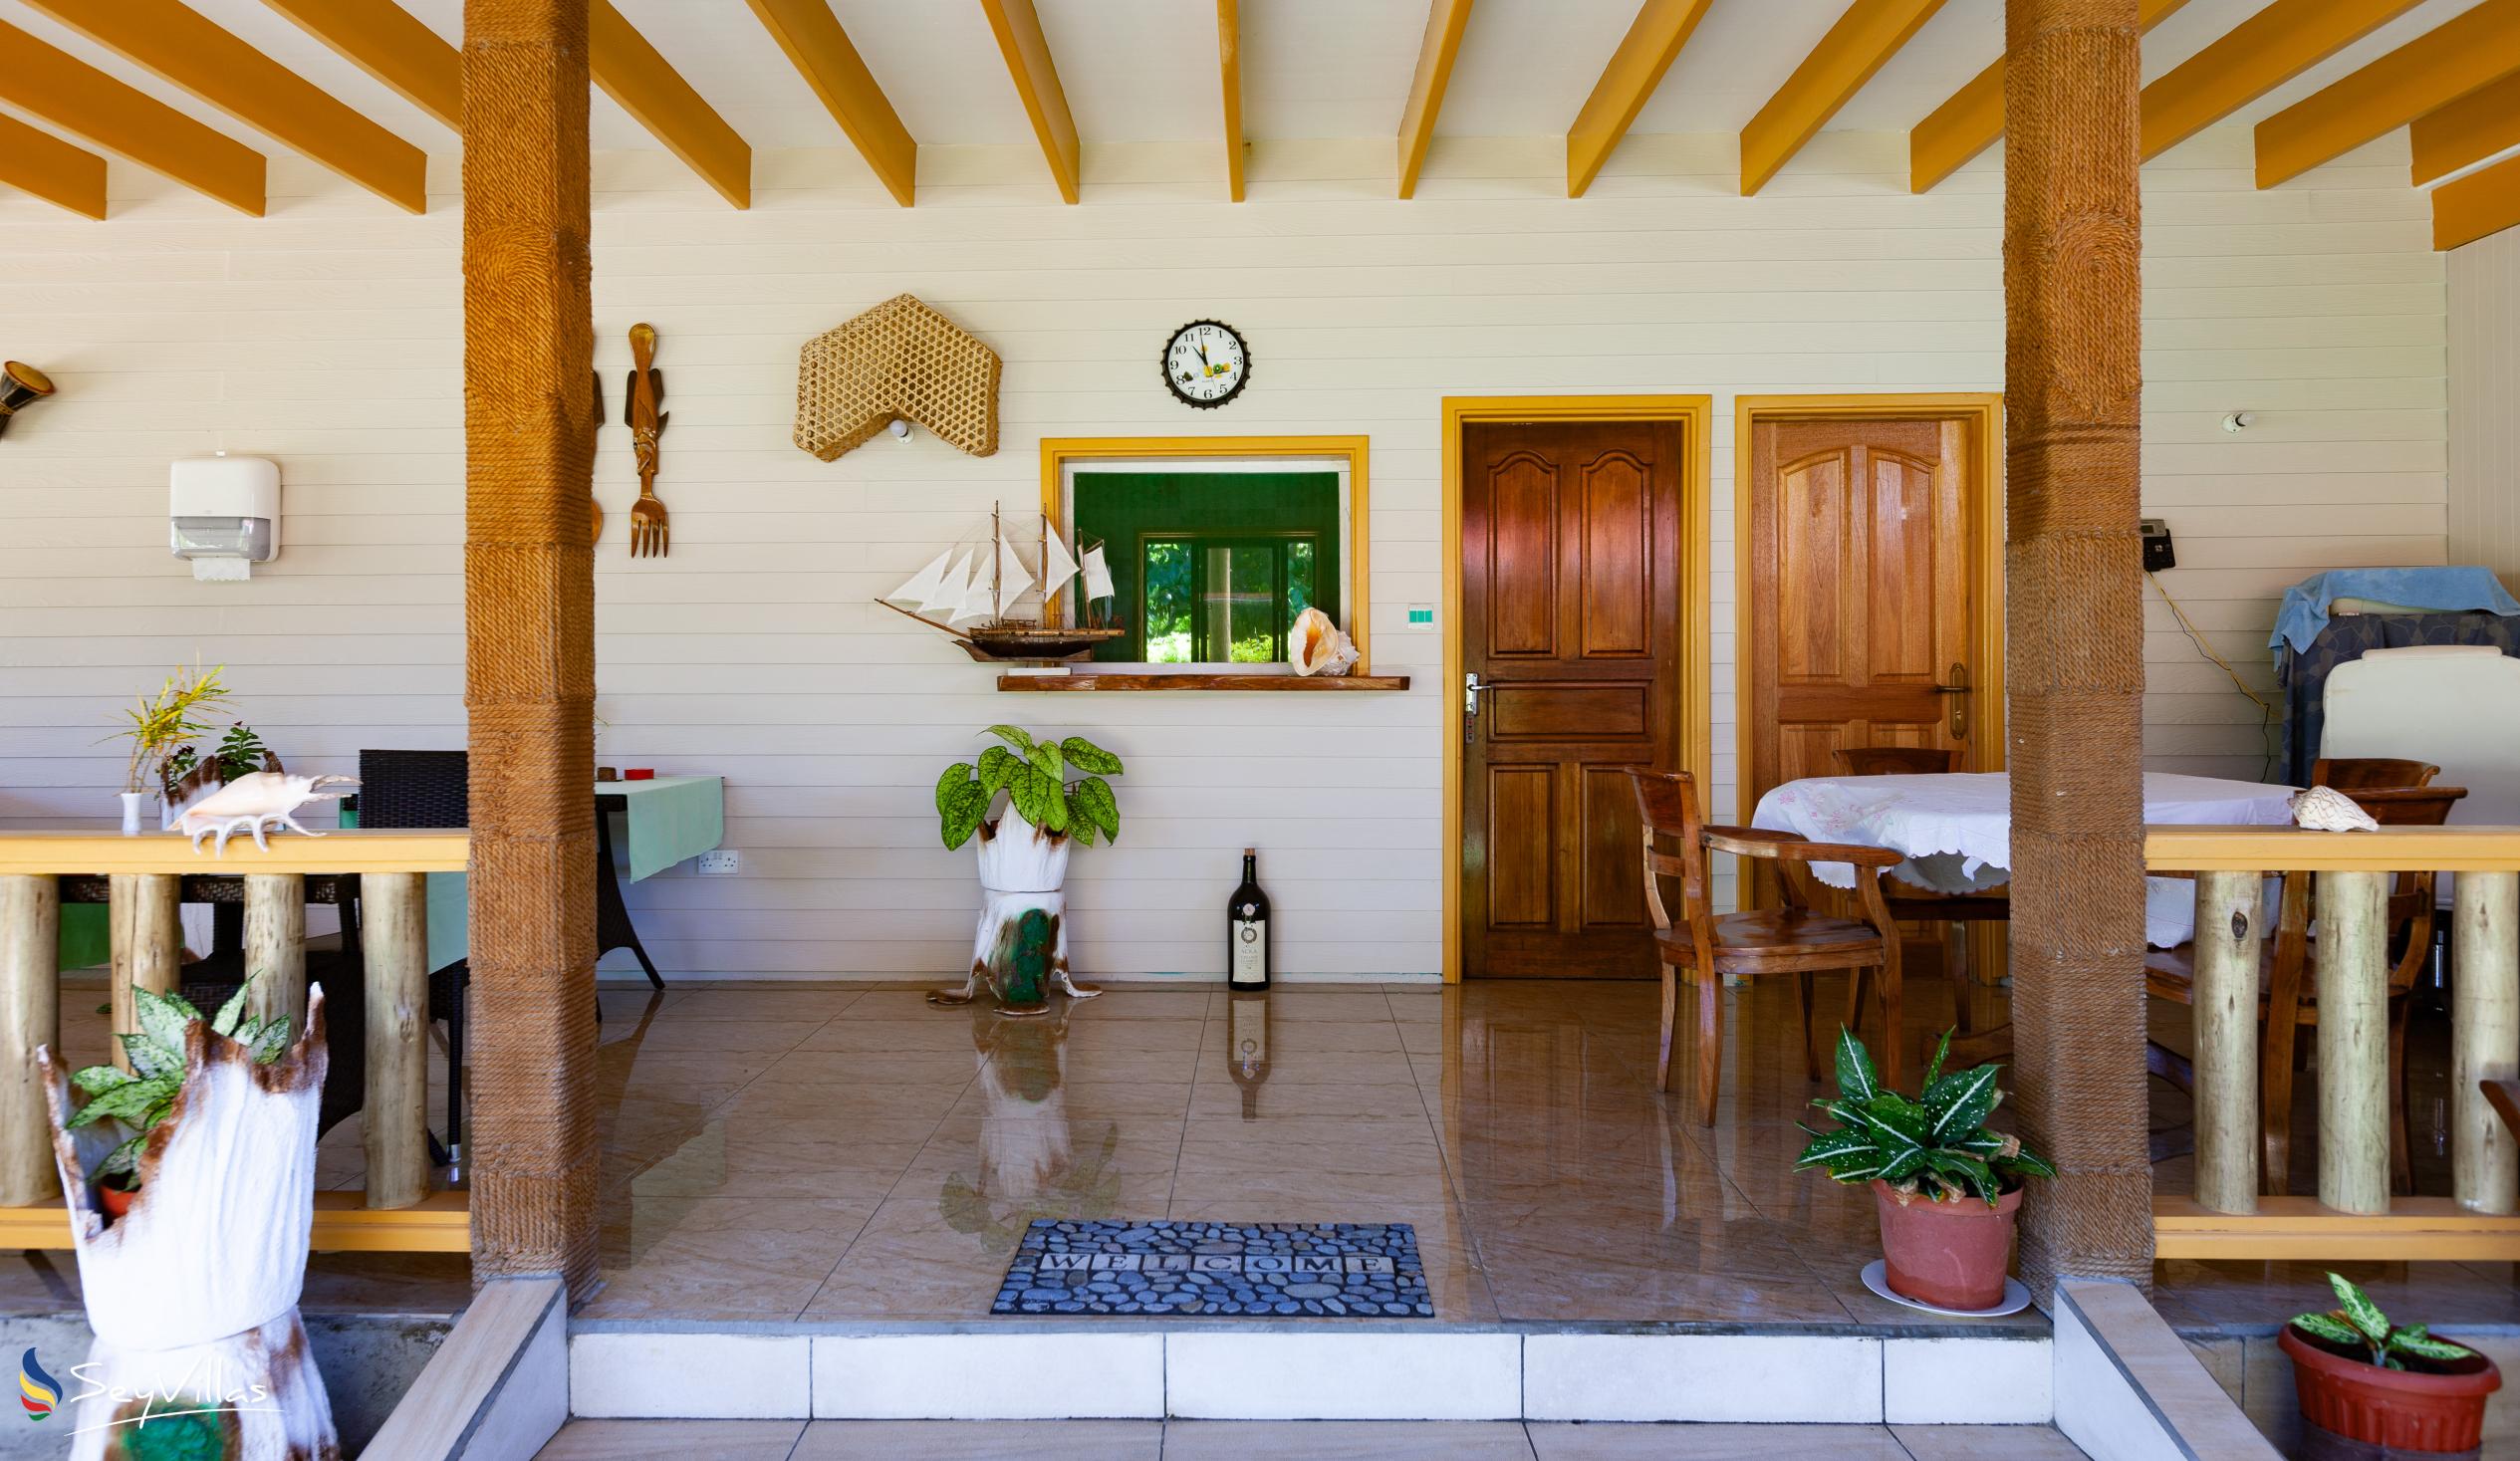 Photo 3: Bwaver Cottage - Indoor area - La Digue (Seychelles)